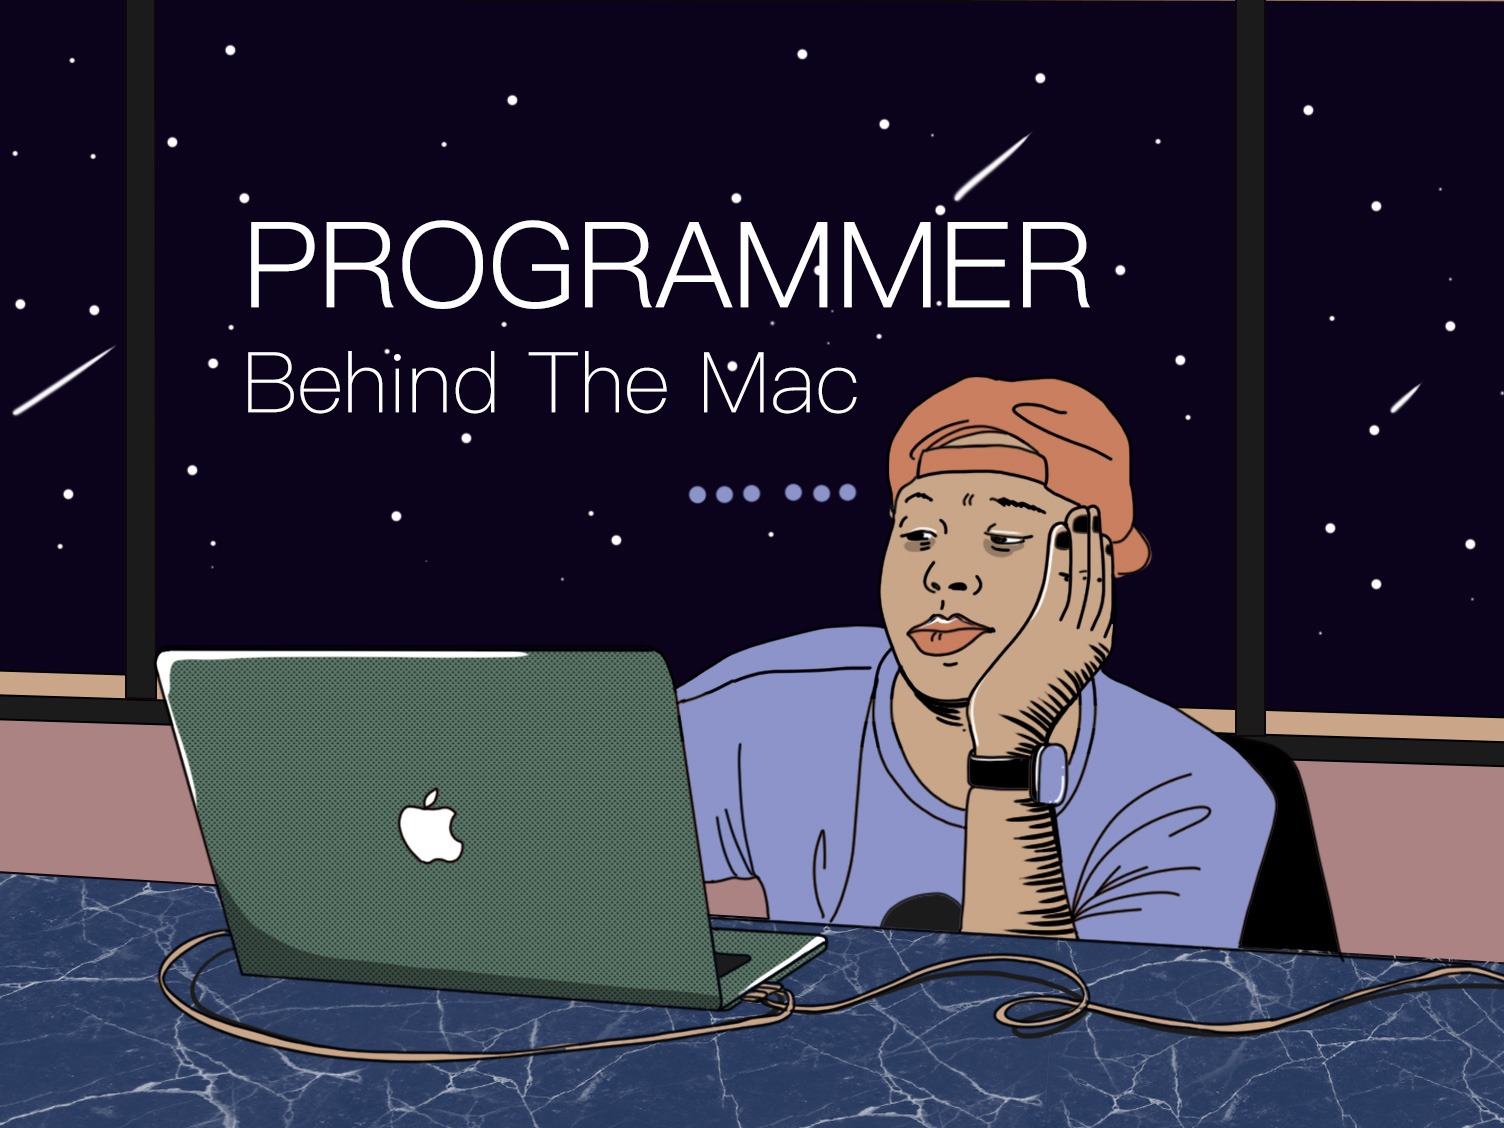 Behind The Mac 致Mac背后的你